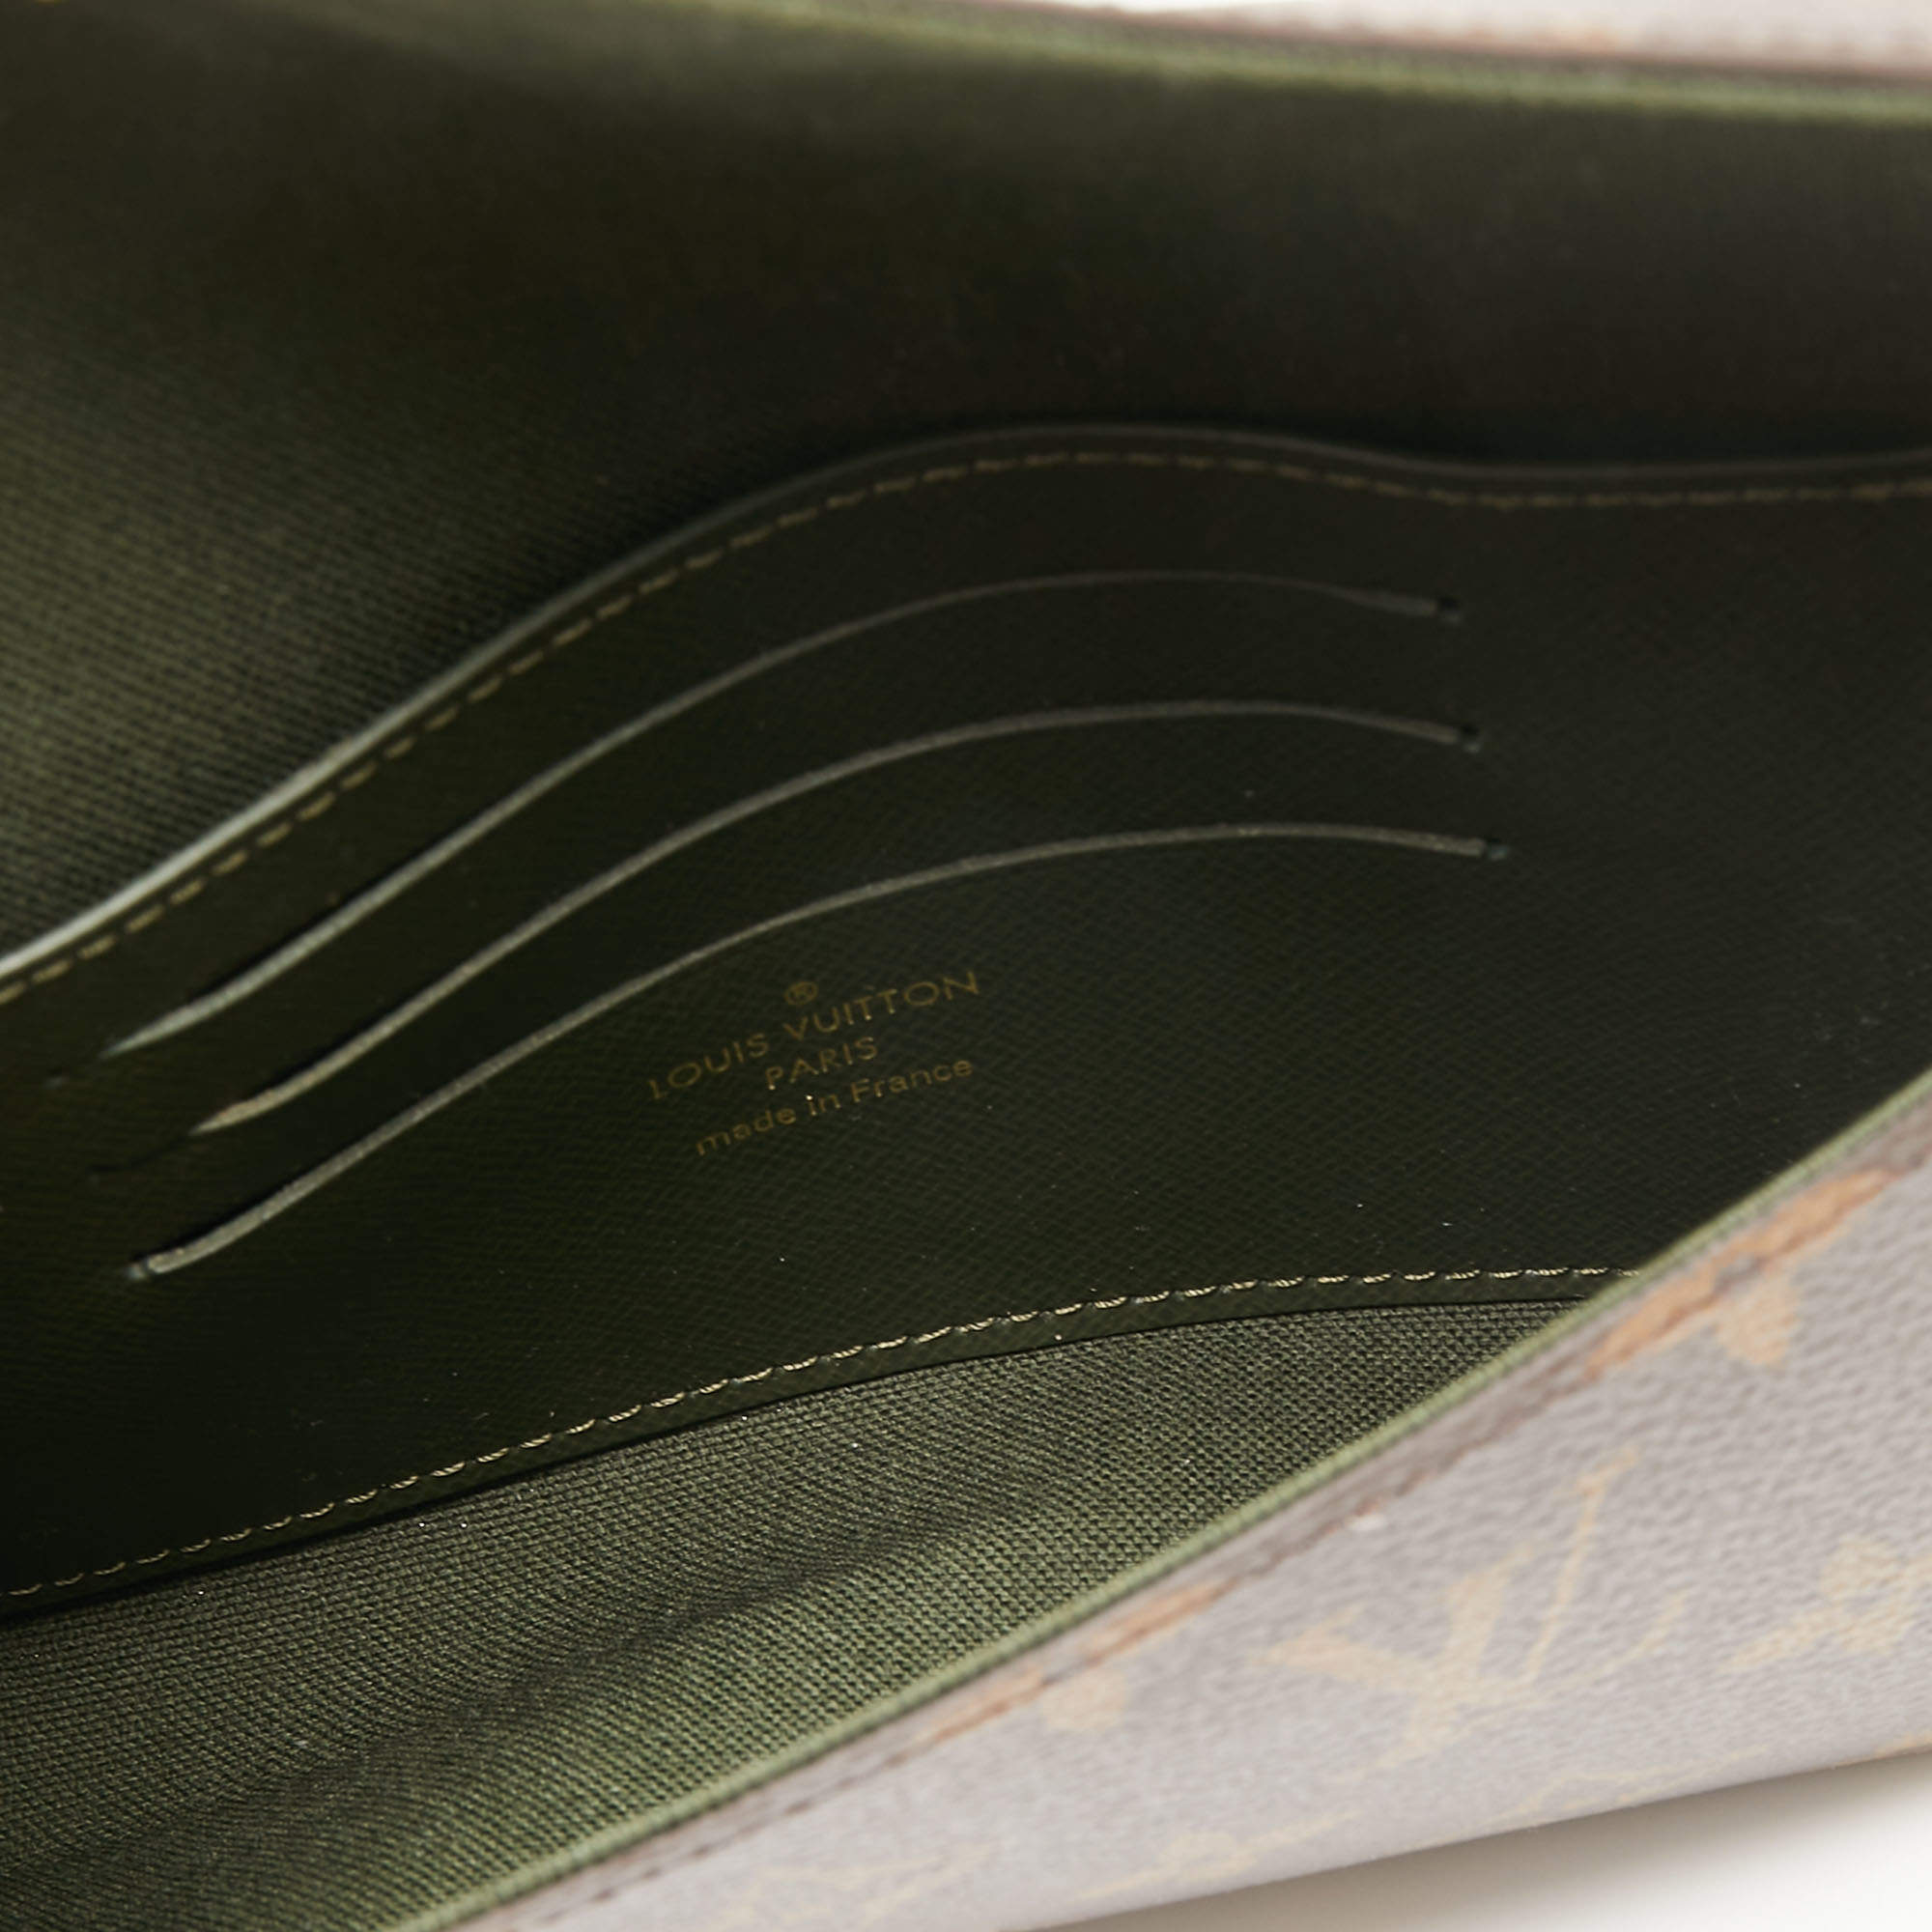 Félicie strap & go cloth crossbody bag Louis Vuitton Brown in Cloth -  37502221